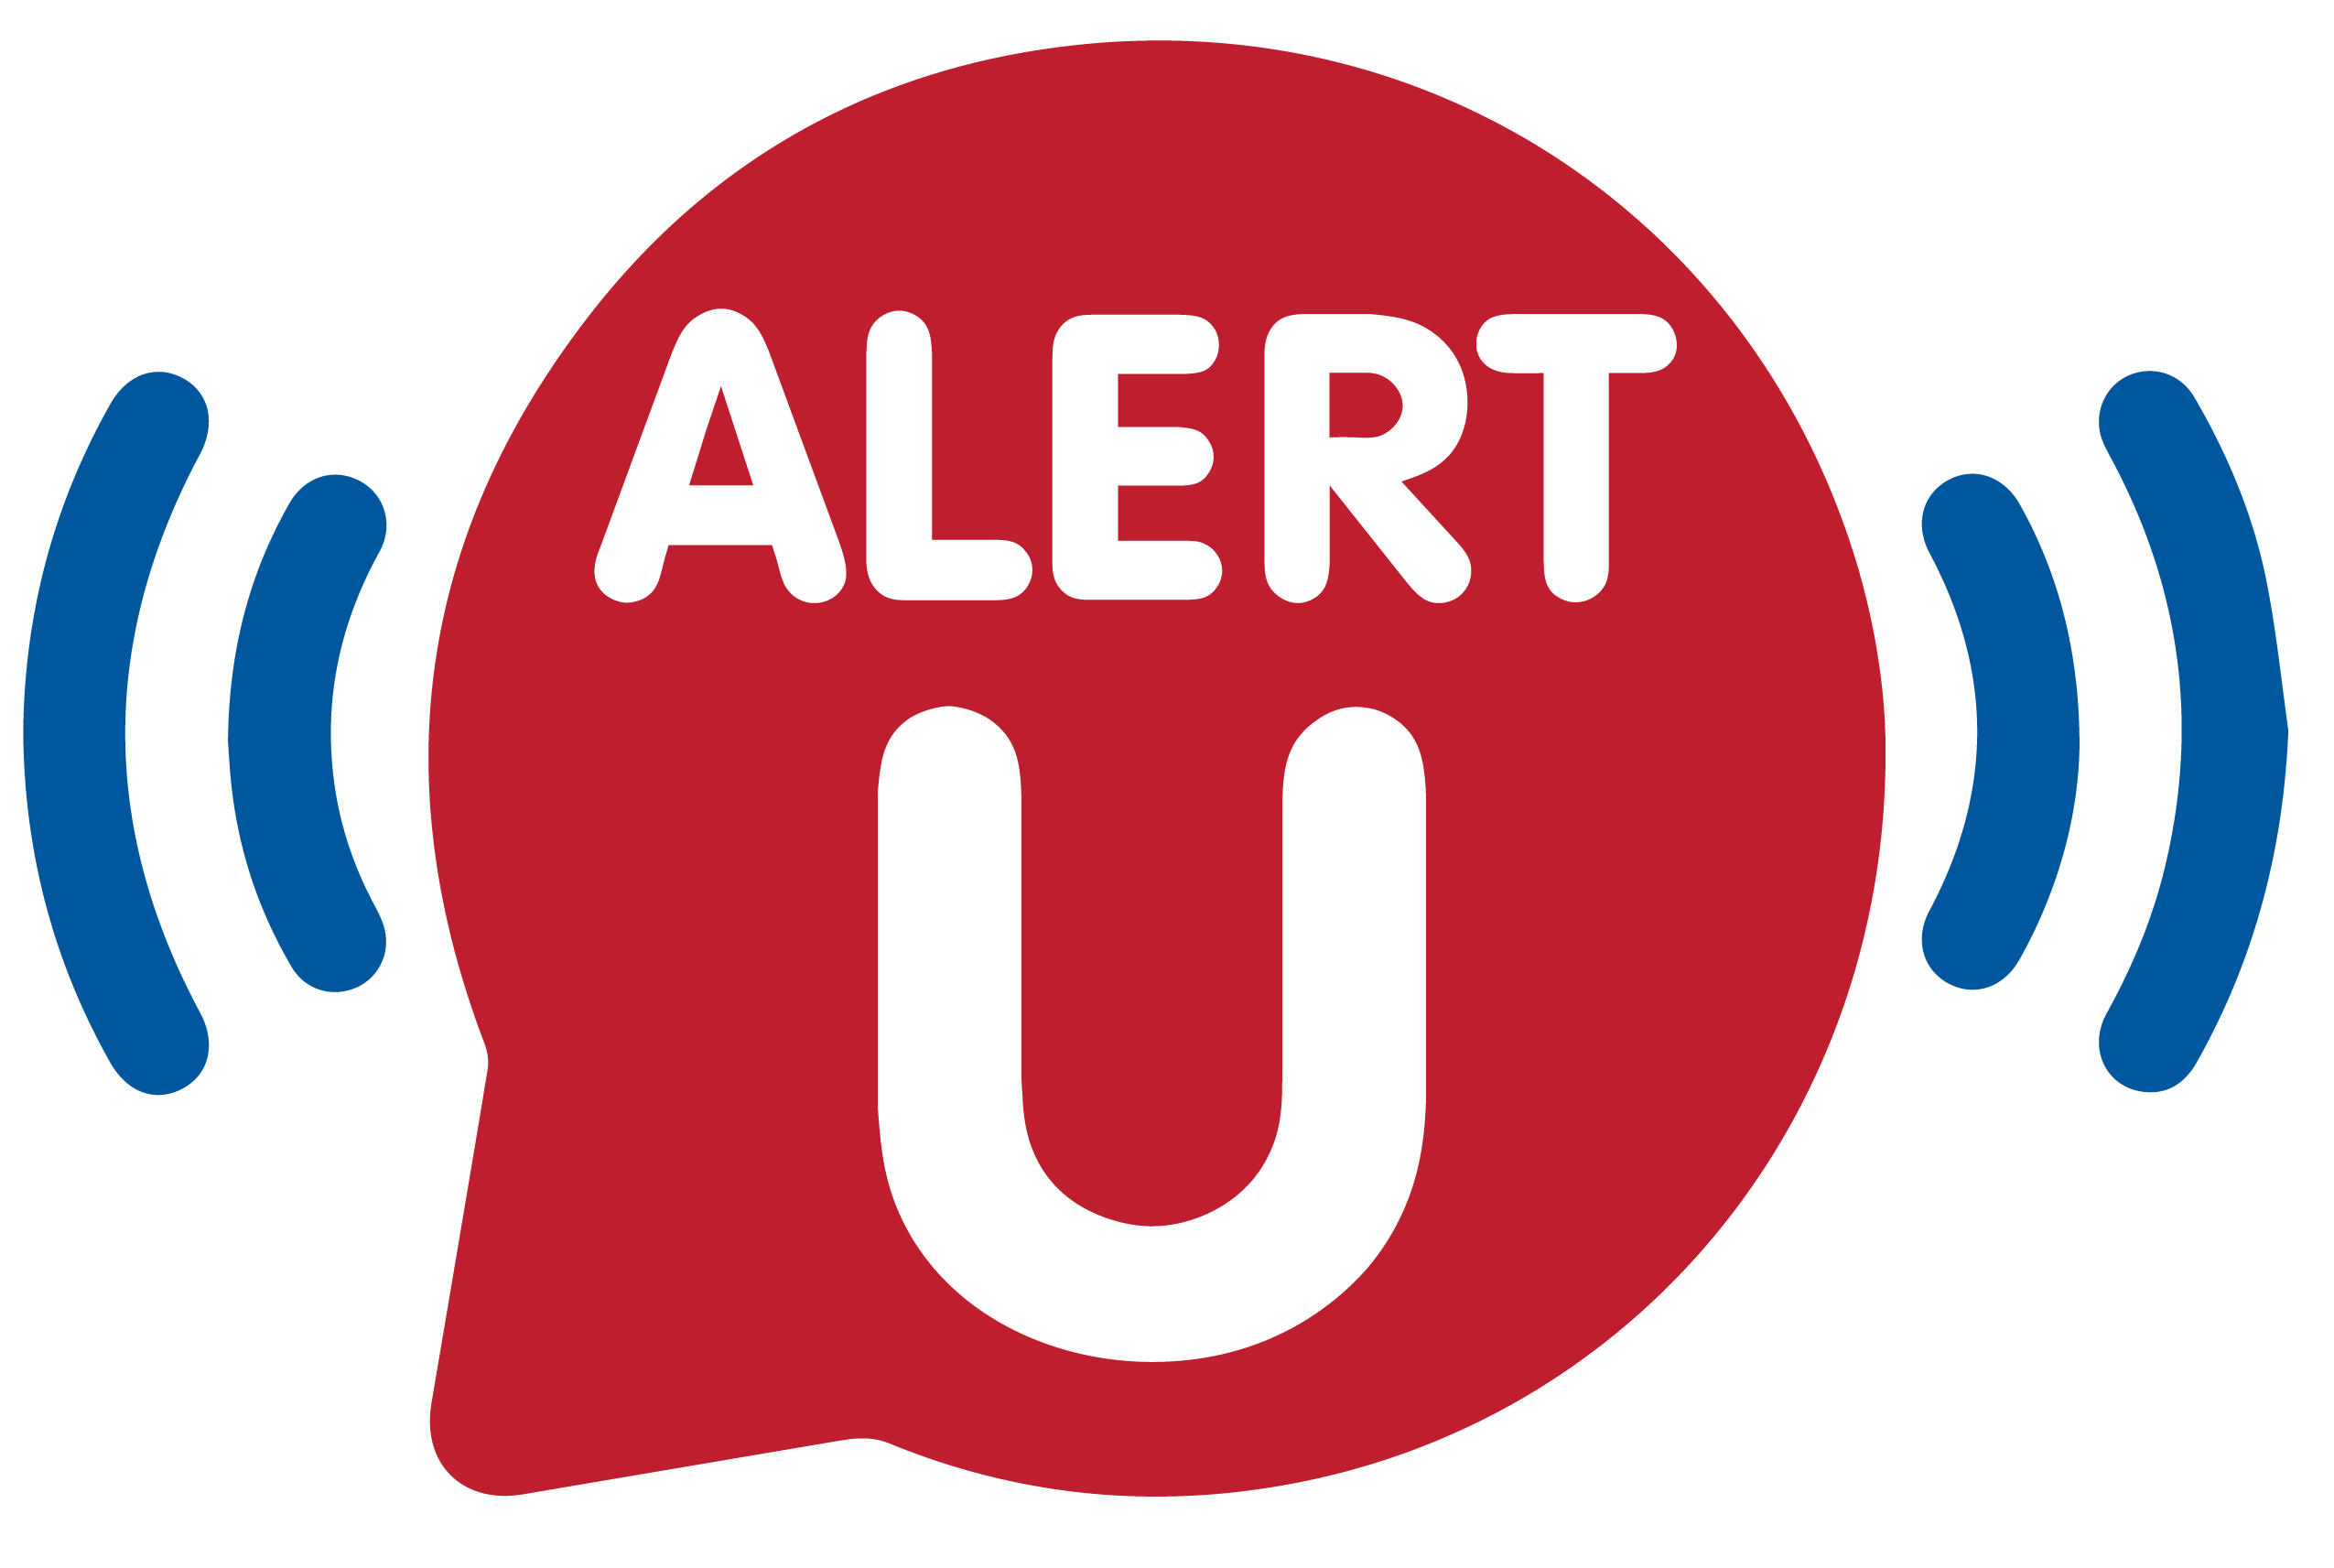 Alert U Logo.